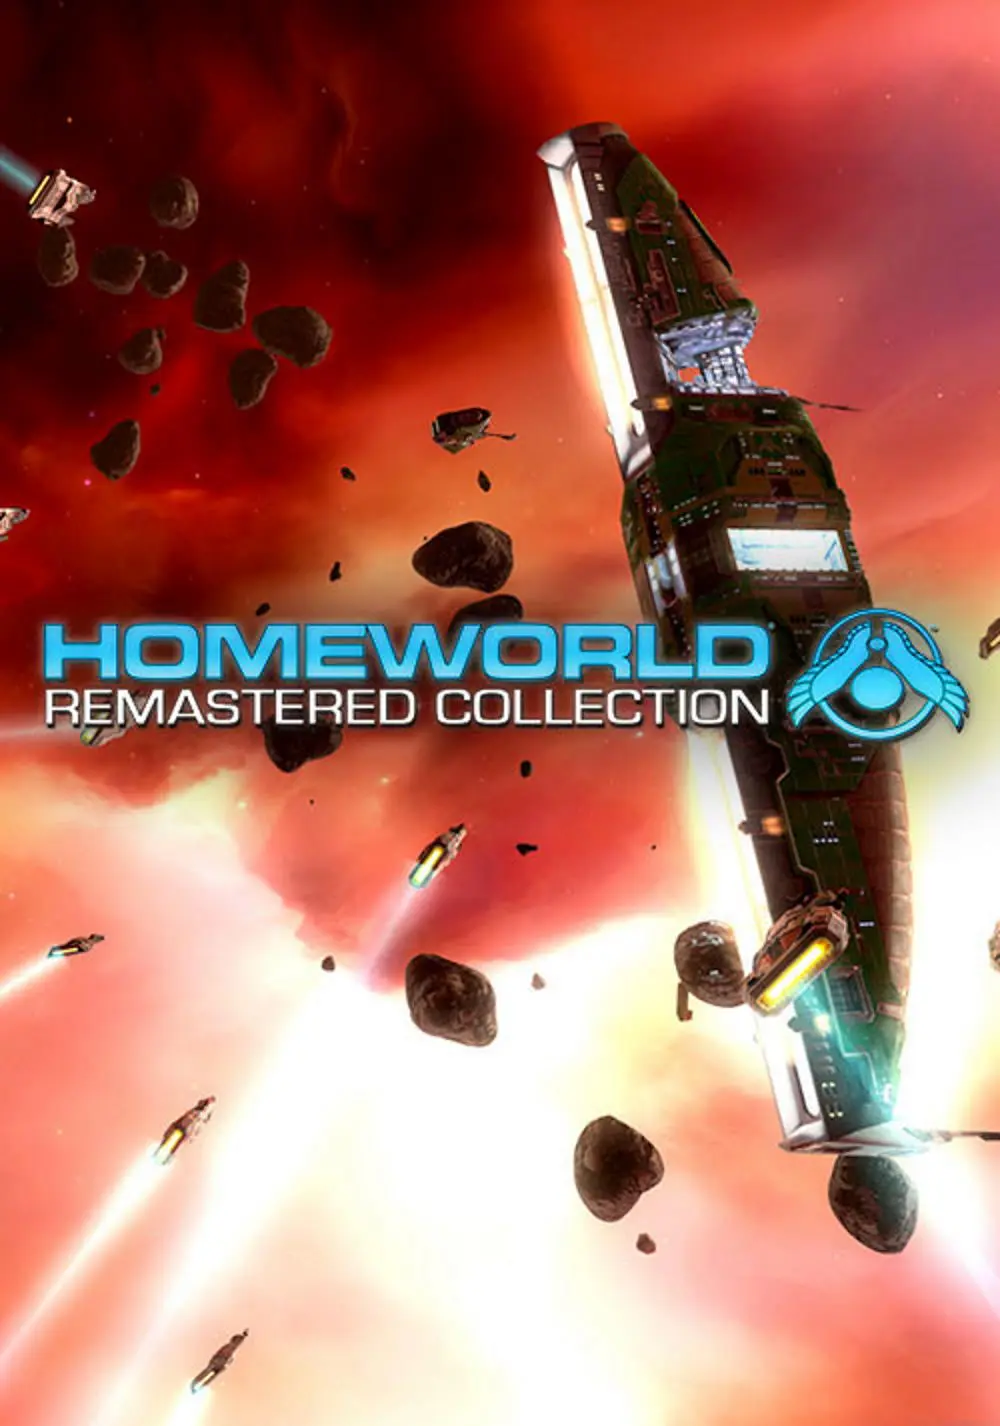 Homeworld Remastered Collection (EU) (PC / Mac) - Steam - Digital Code